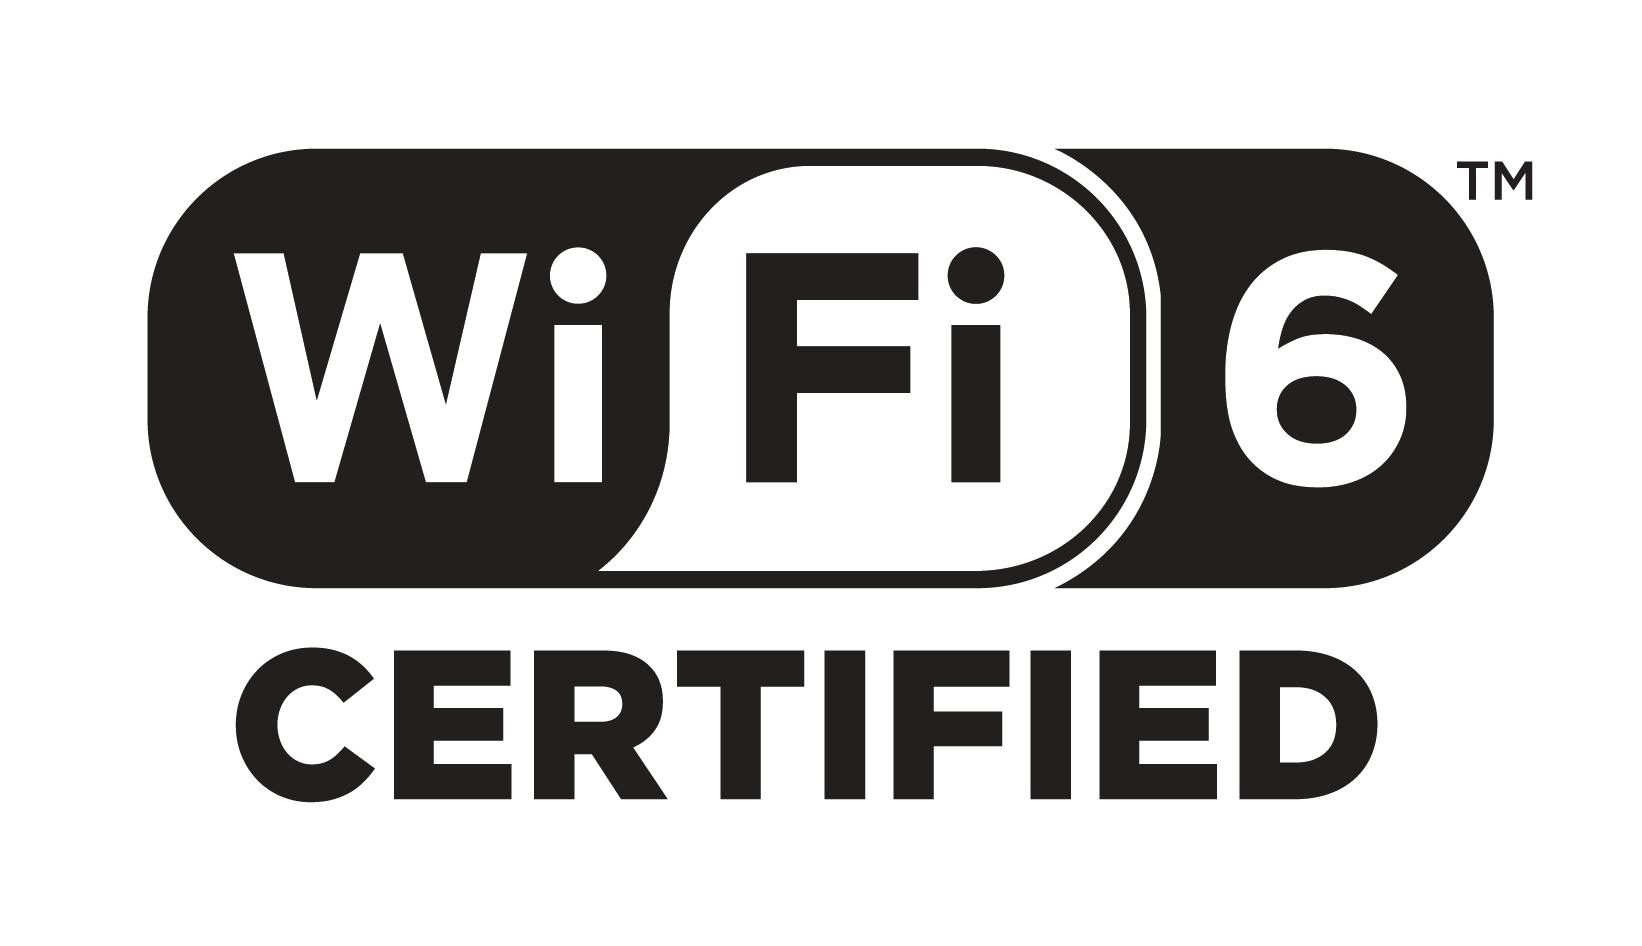 Wi-Fi CERTIFIED 6™ delivers new Wi-Fi® era